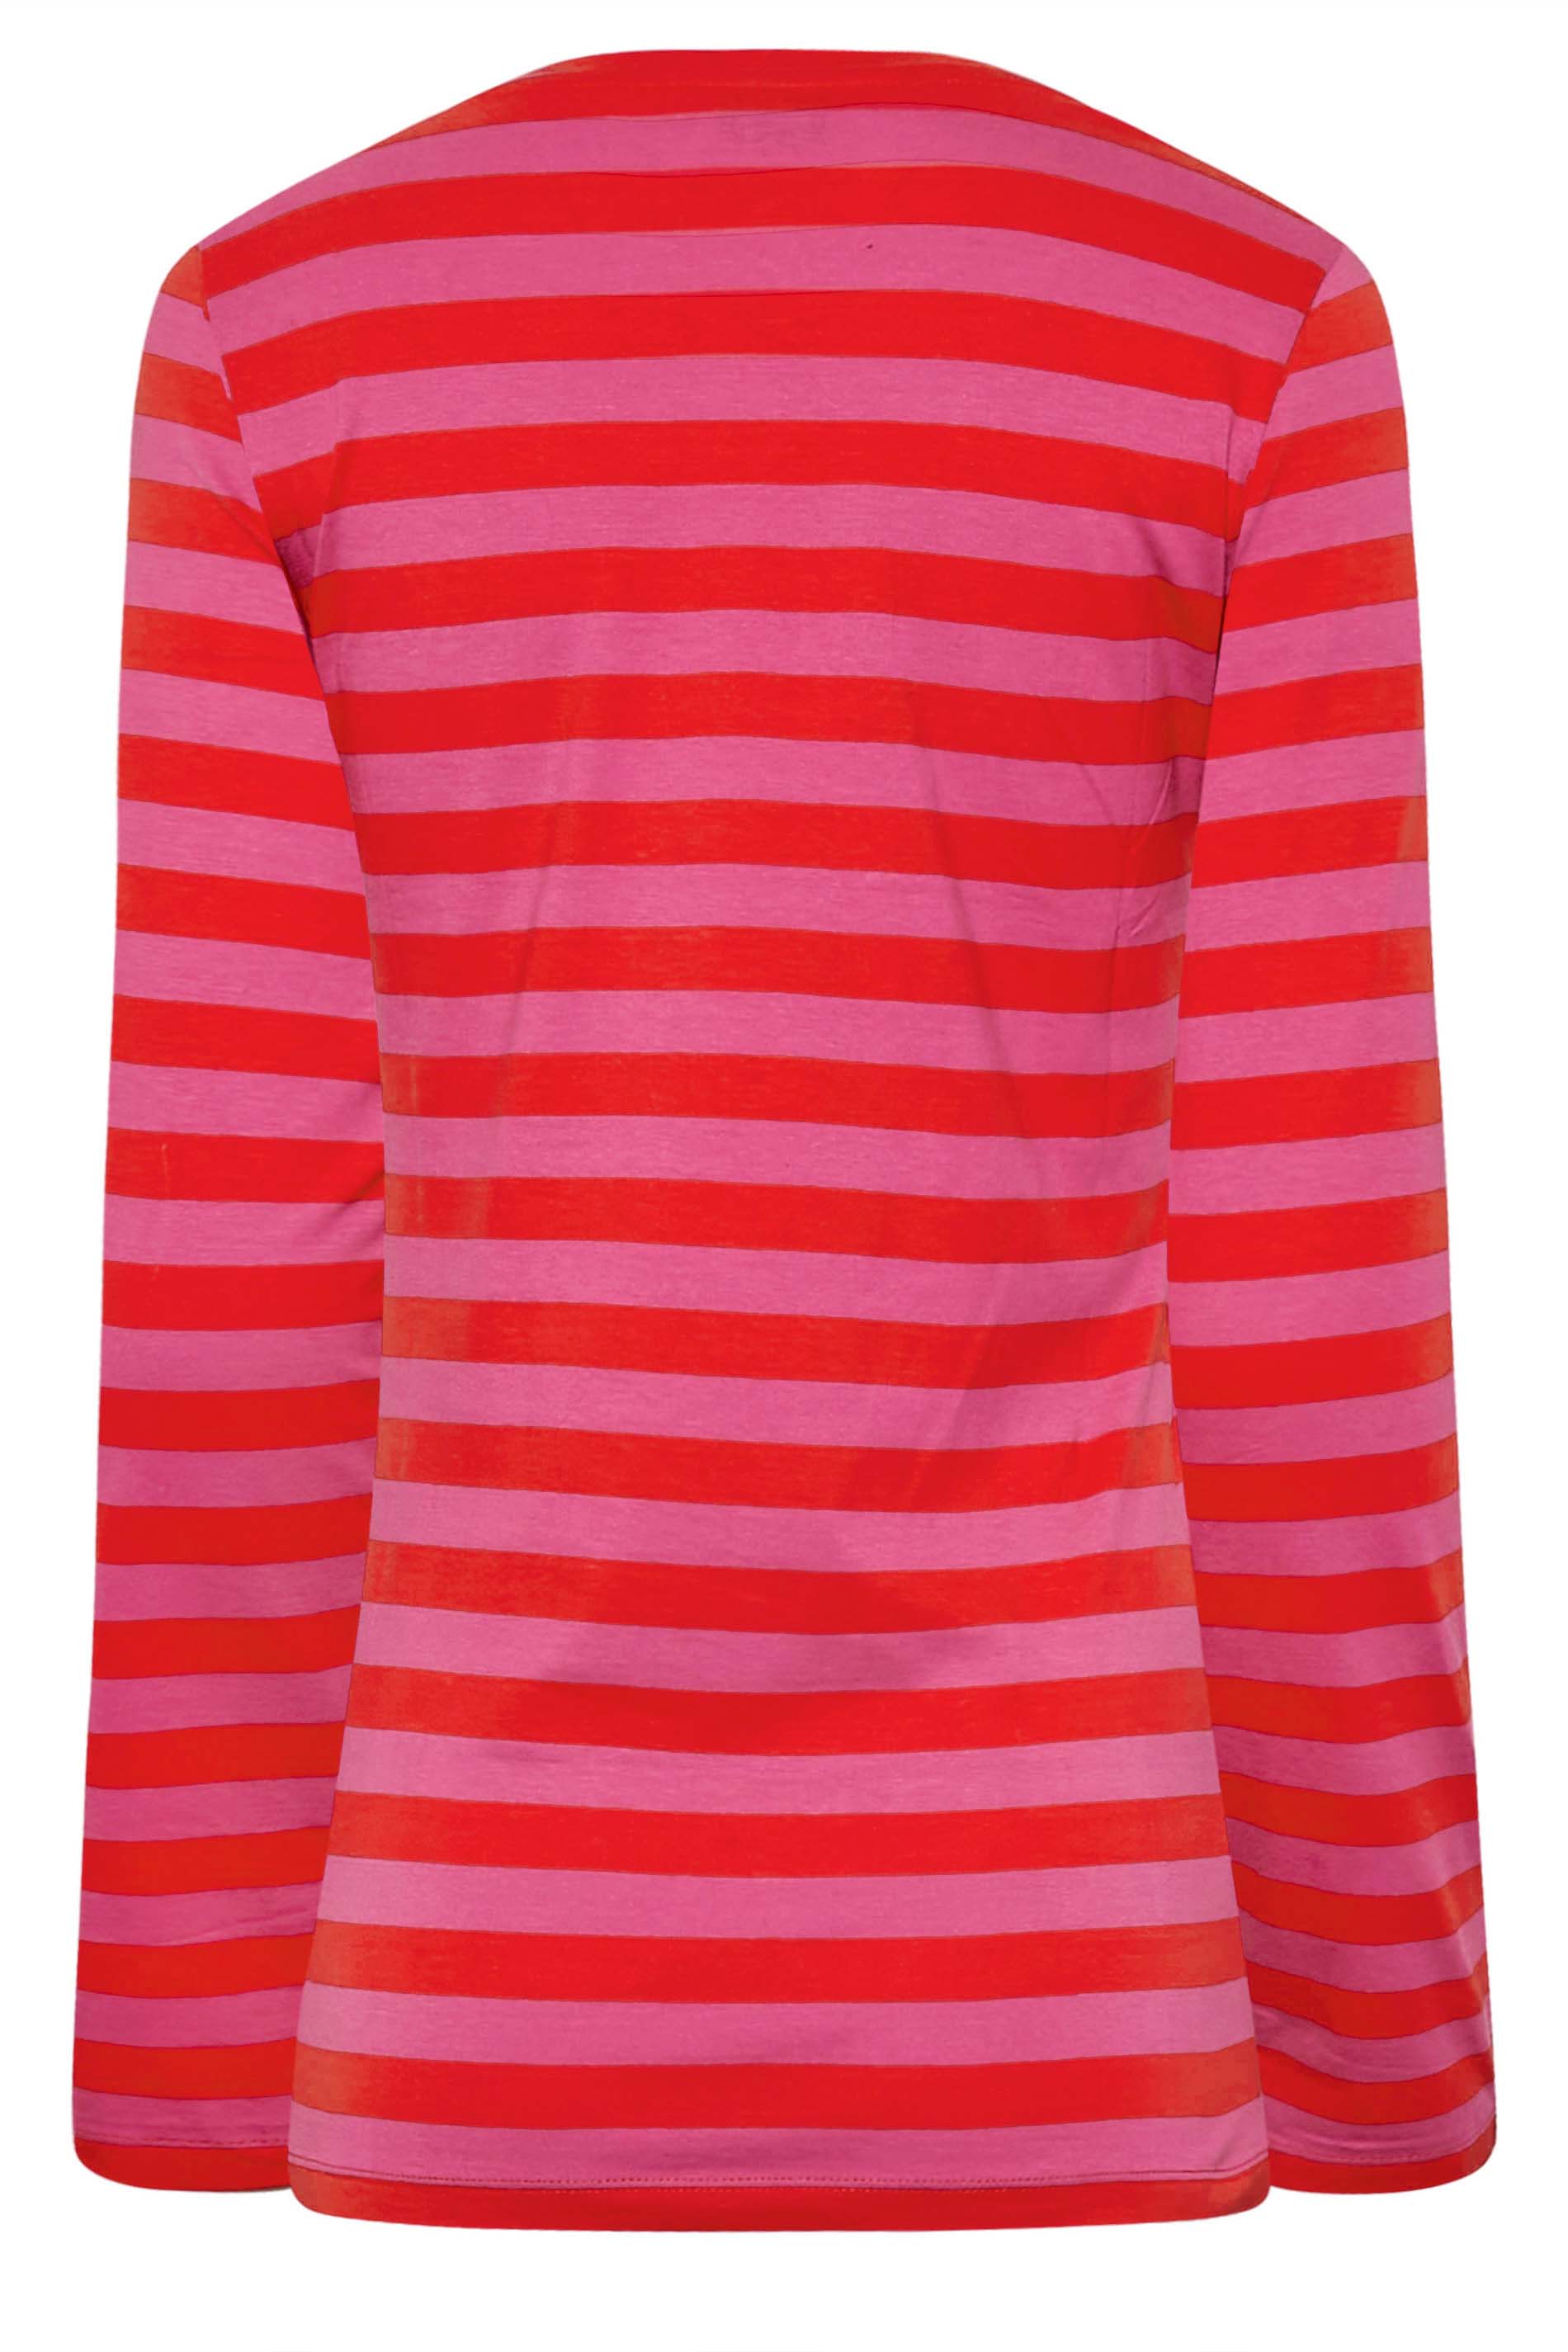 LTS Tall Women's Red & Pink Stripe Long Sleeve T-Shirt | Long Tall Sally